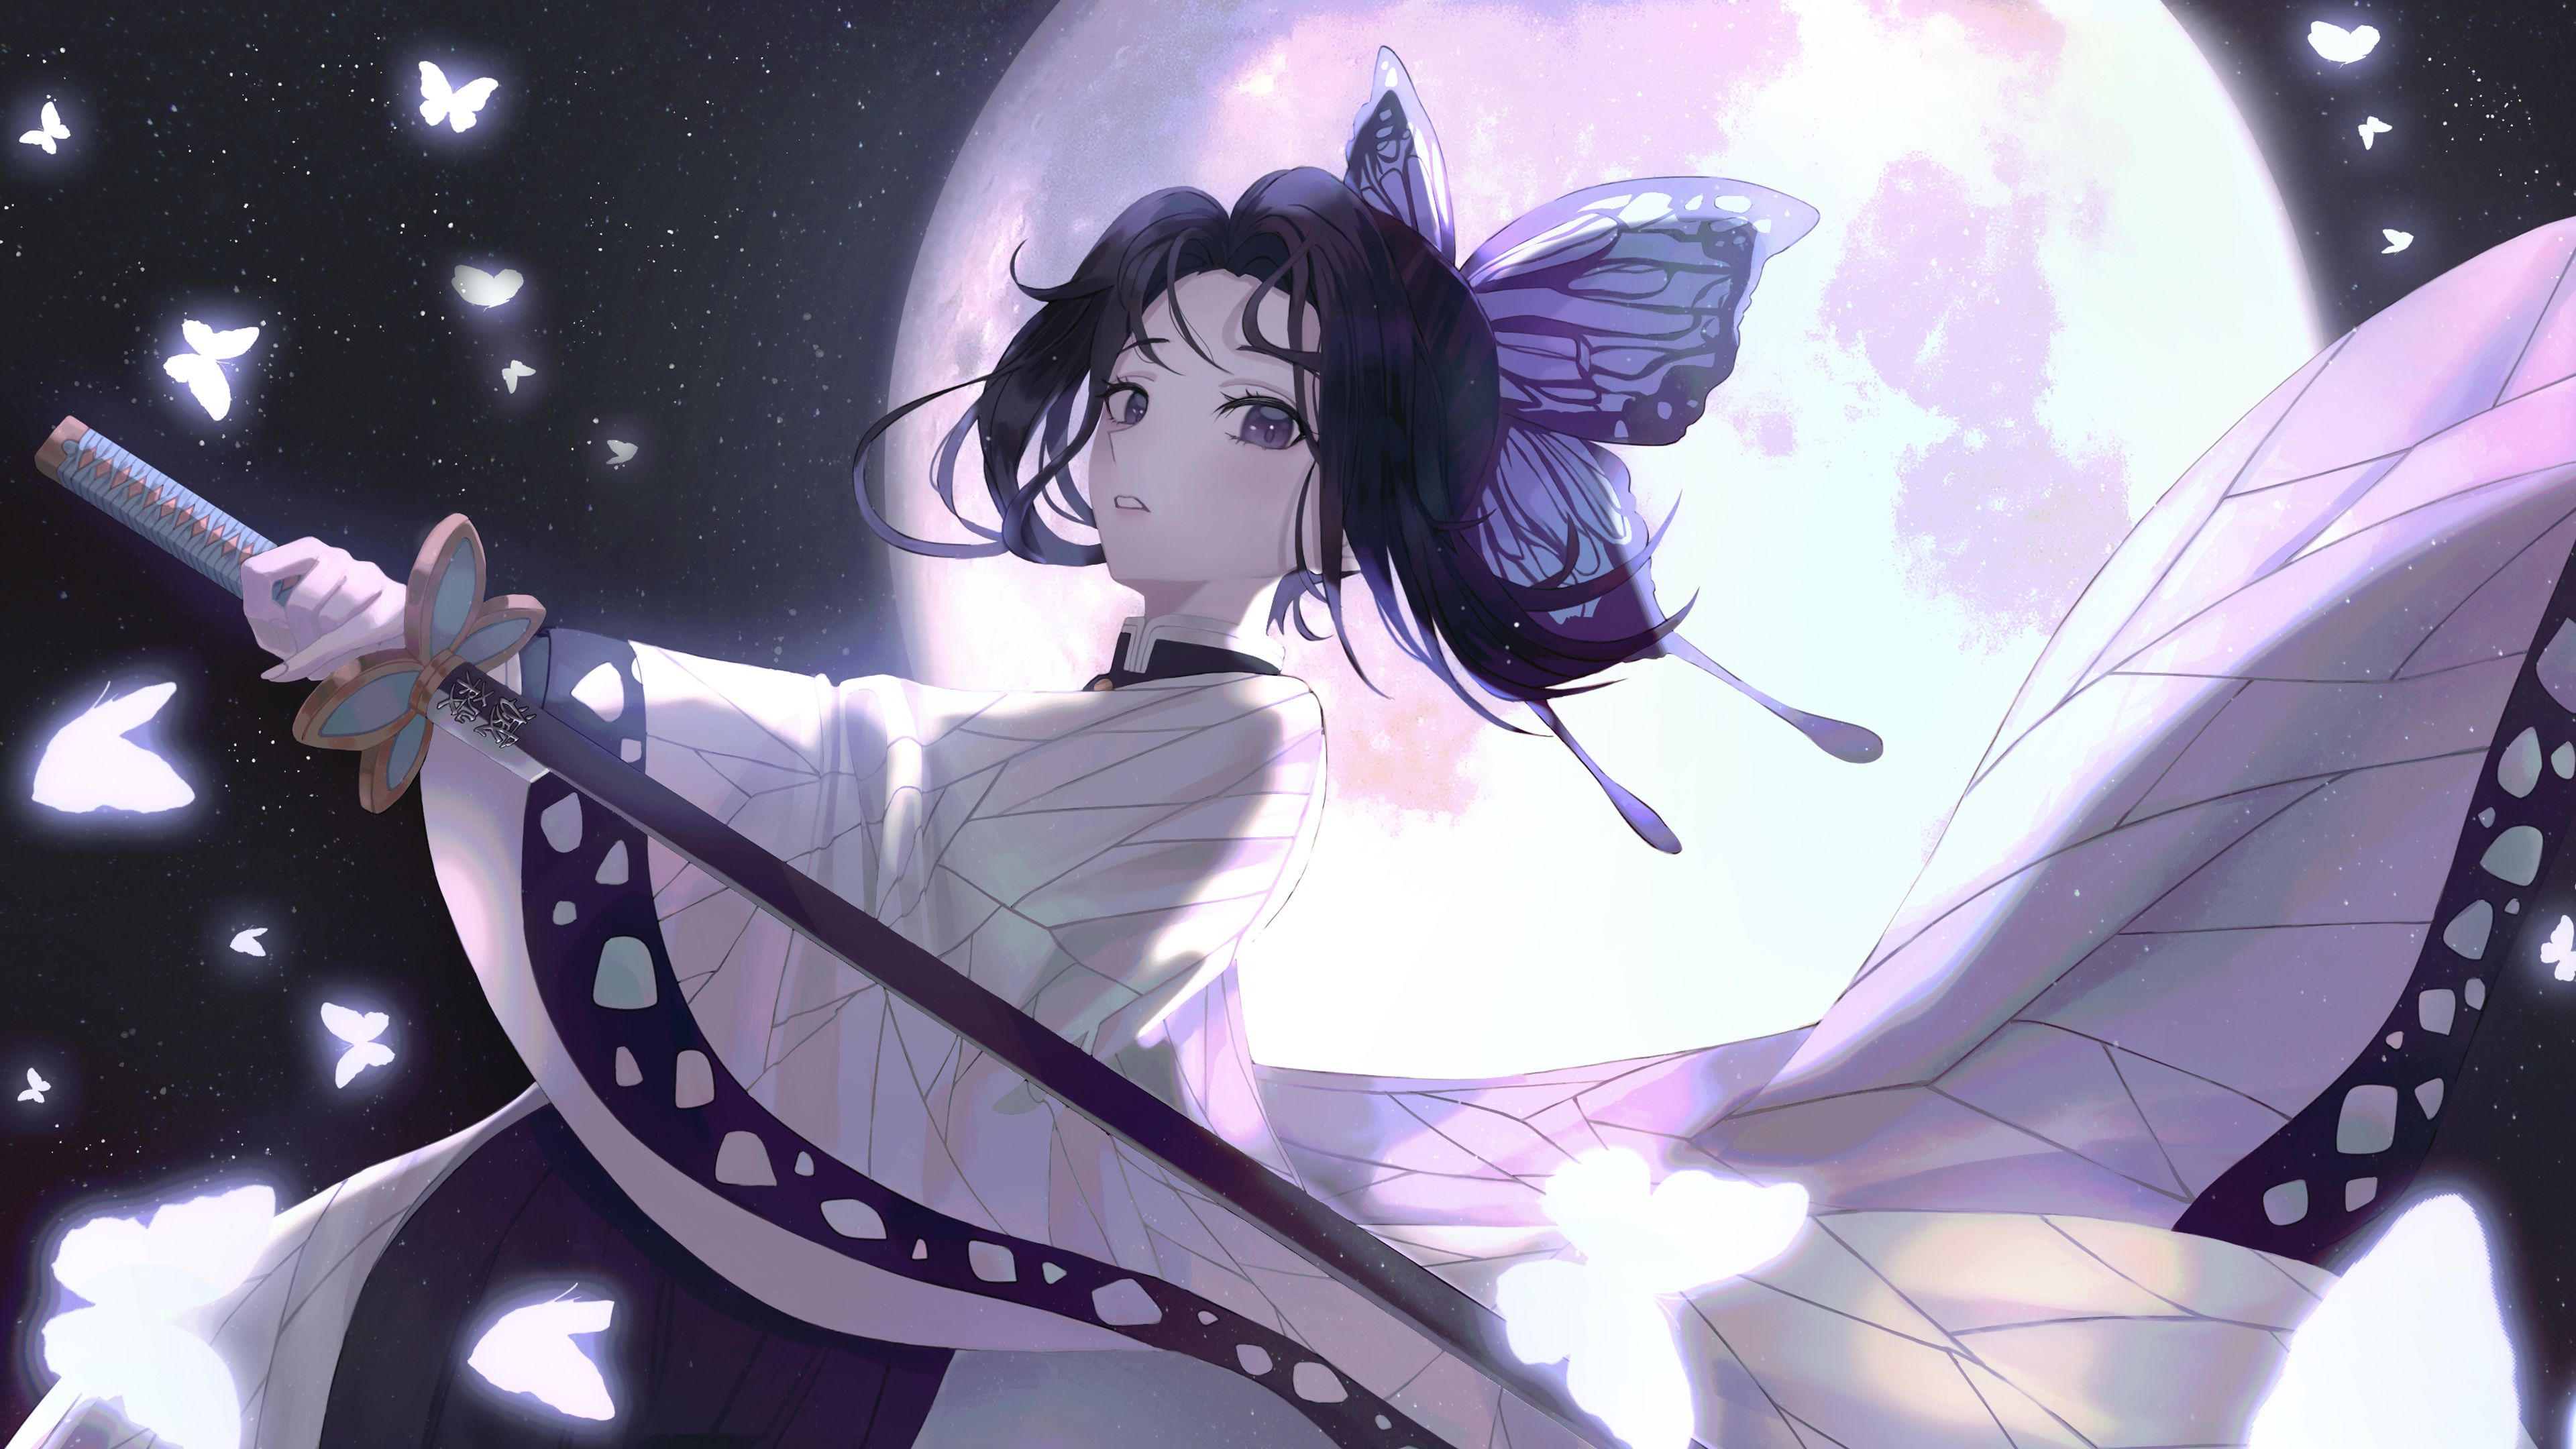 Demon Slayer Butterfly Girl Shinobu Kochou With Sword With Backgound Of Bright Moon Dark Sky And Stars 4K HD Anime Wallpaper